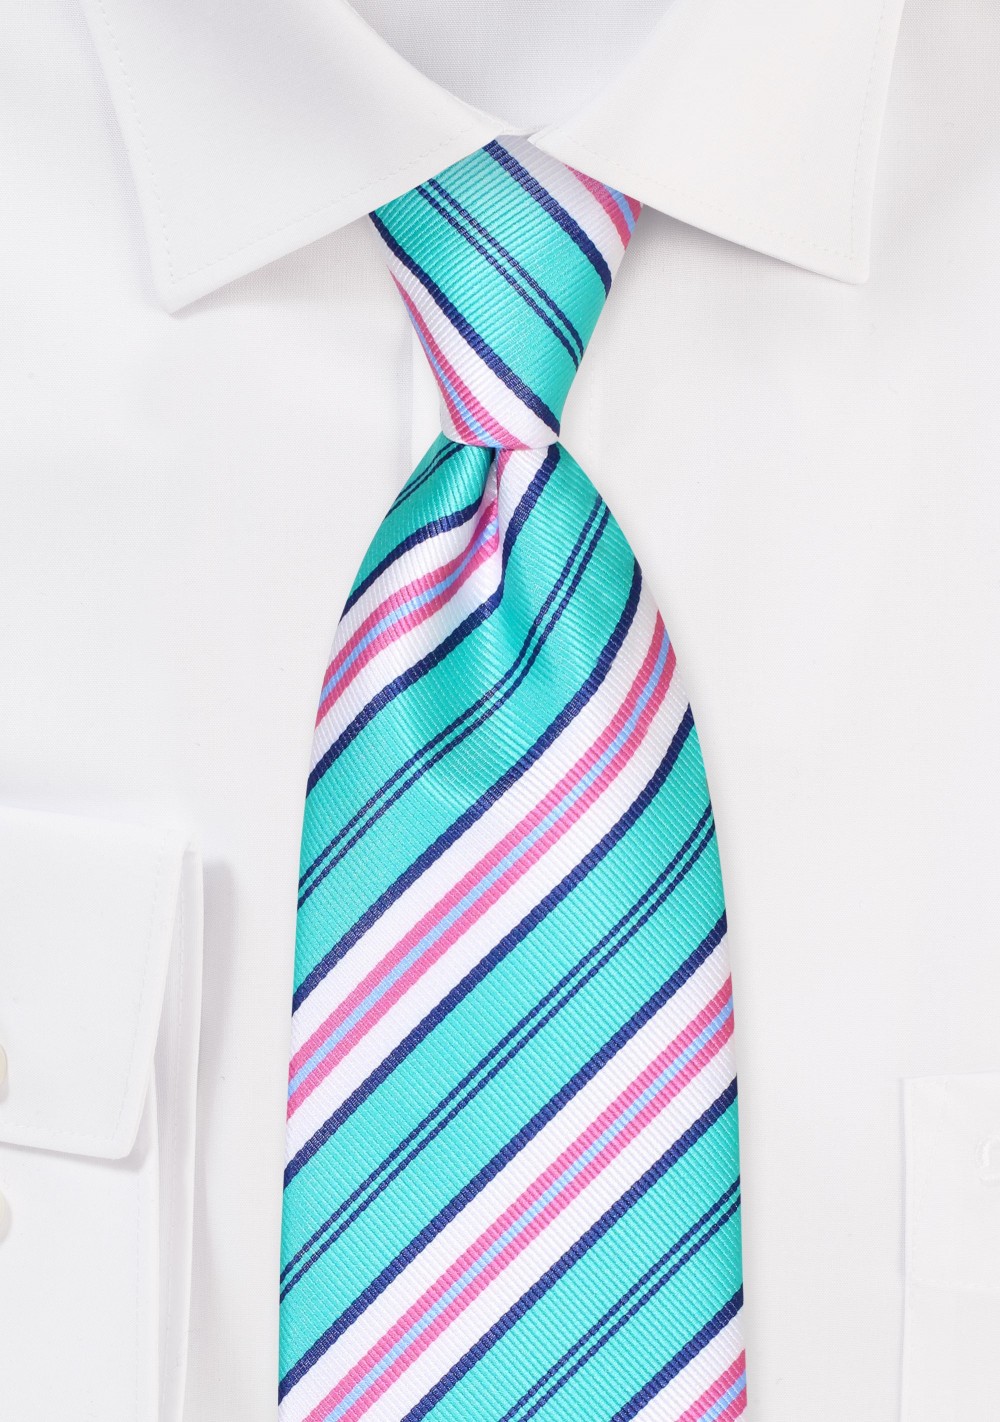 Trendy Striped Tie in Aqua